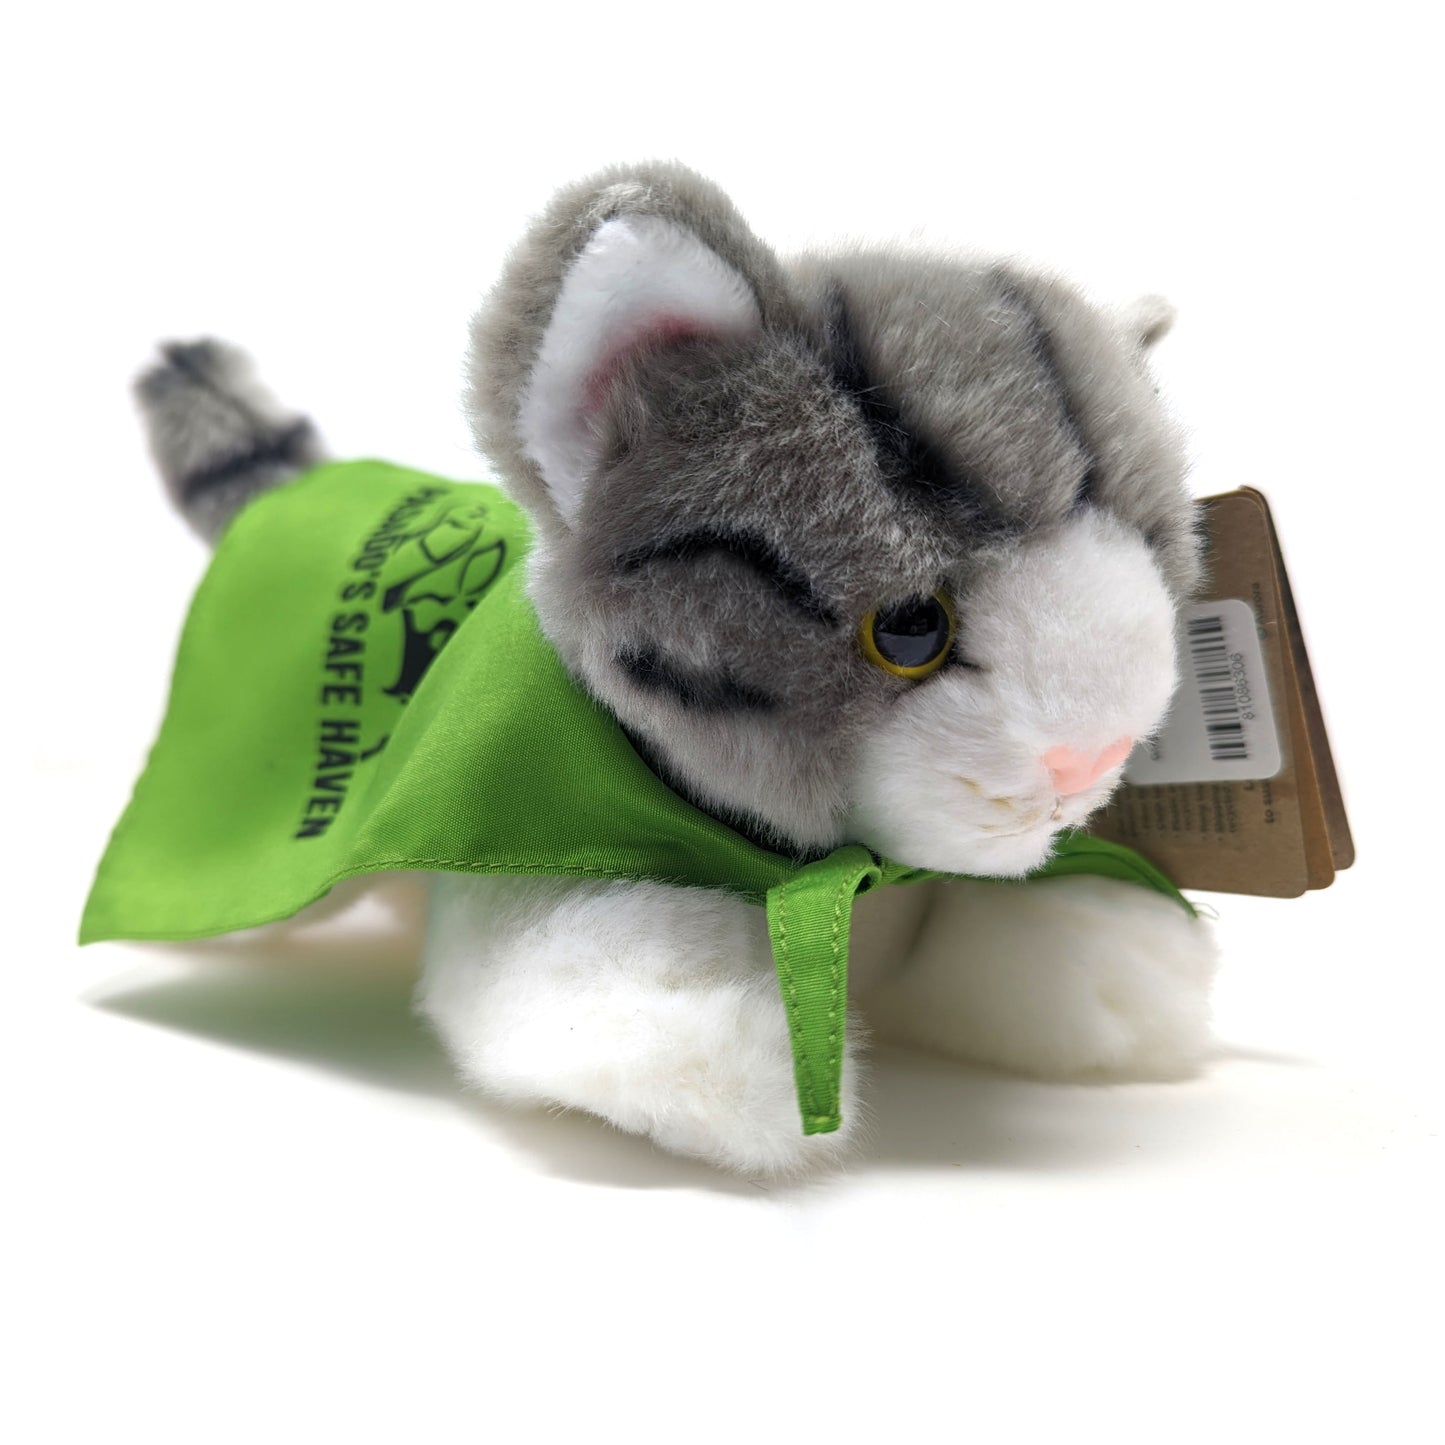 Grey Tabby Cat Plush